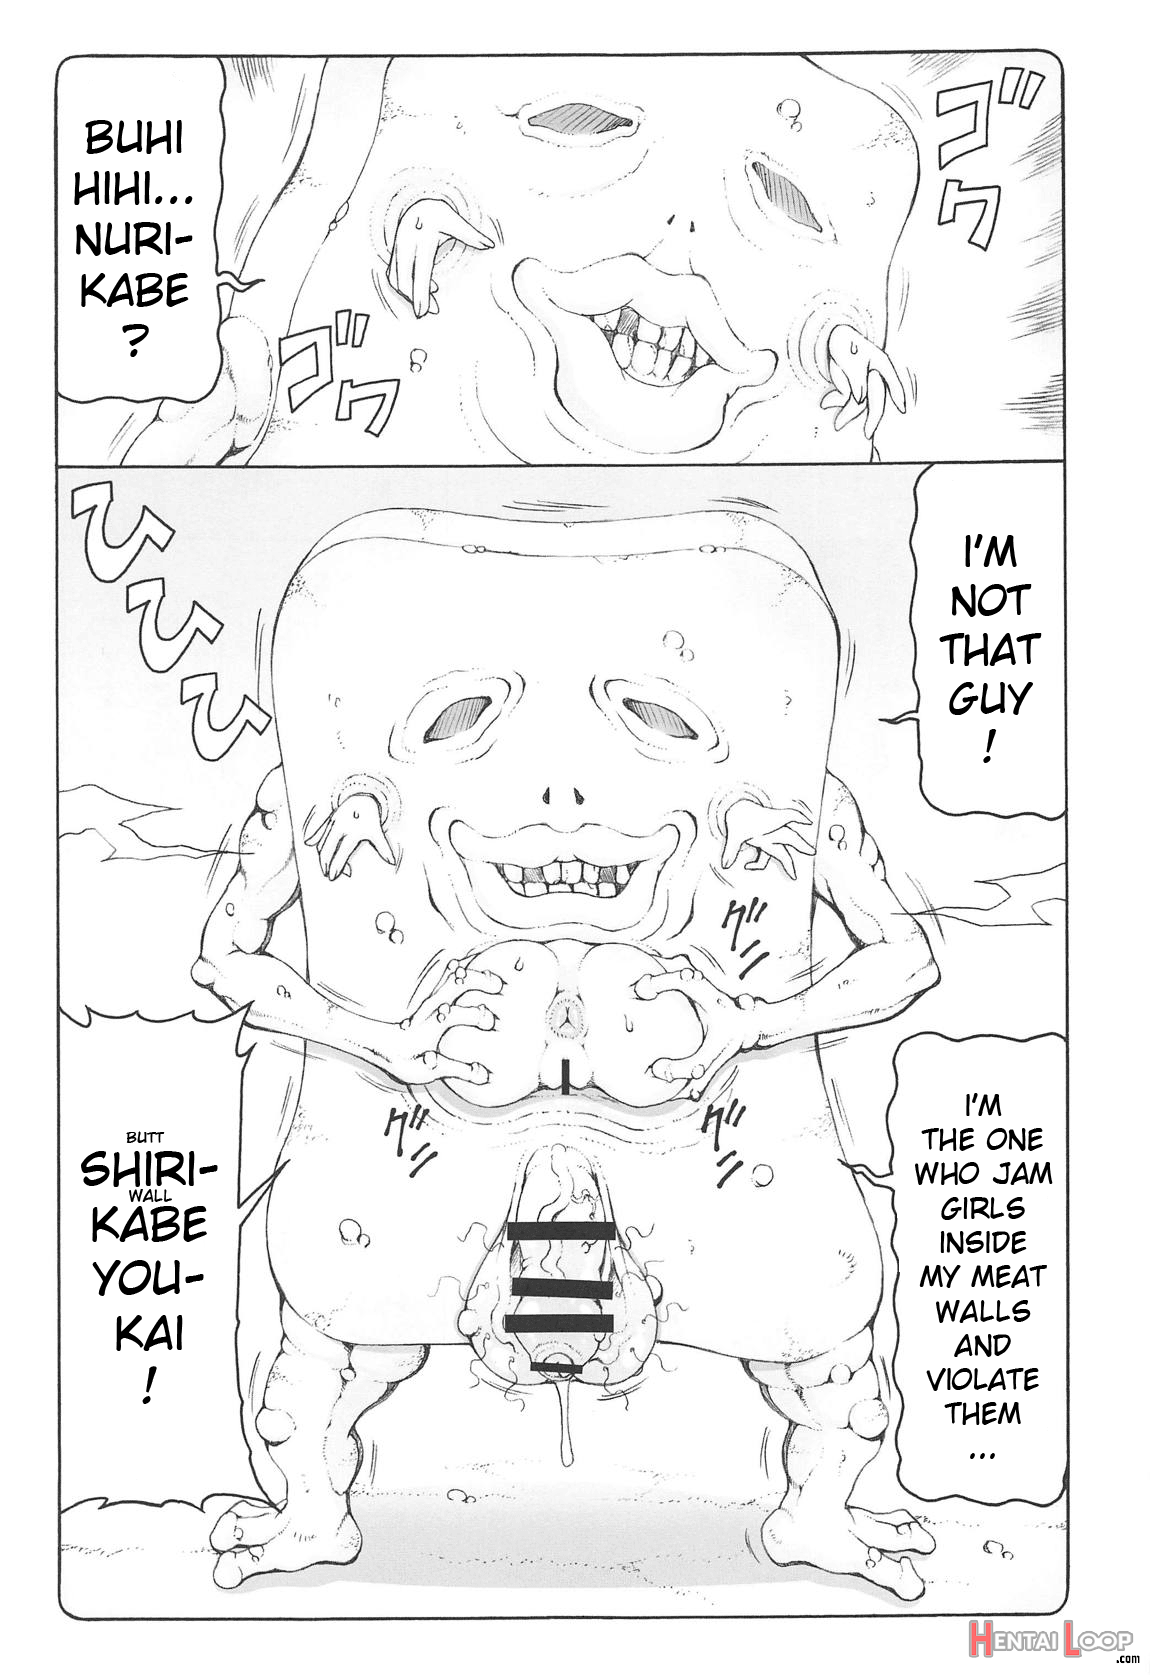 Nuko Musume Vs Youkai Shirikabe page 7